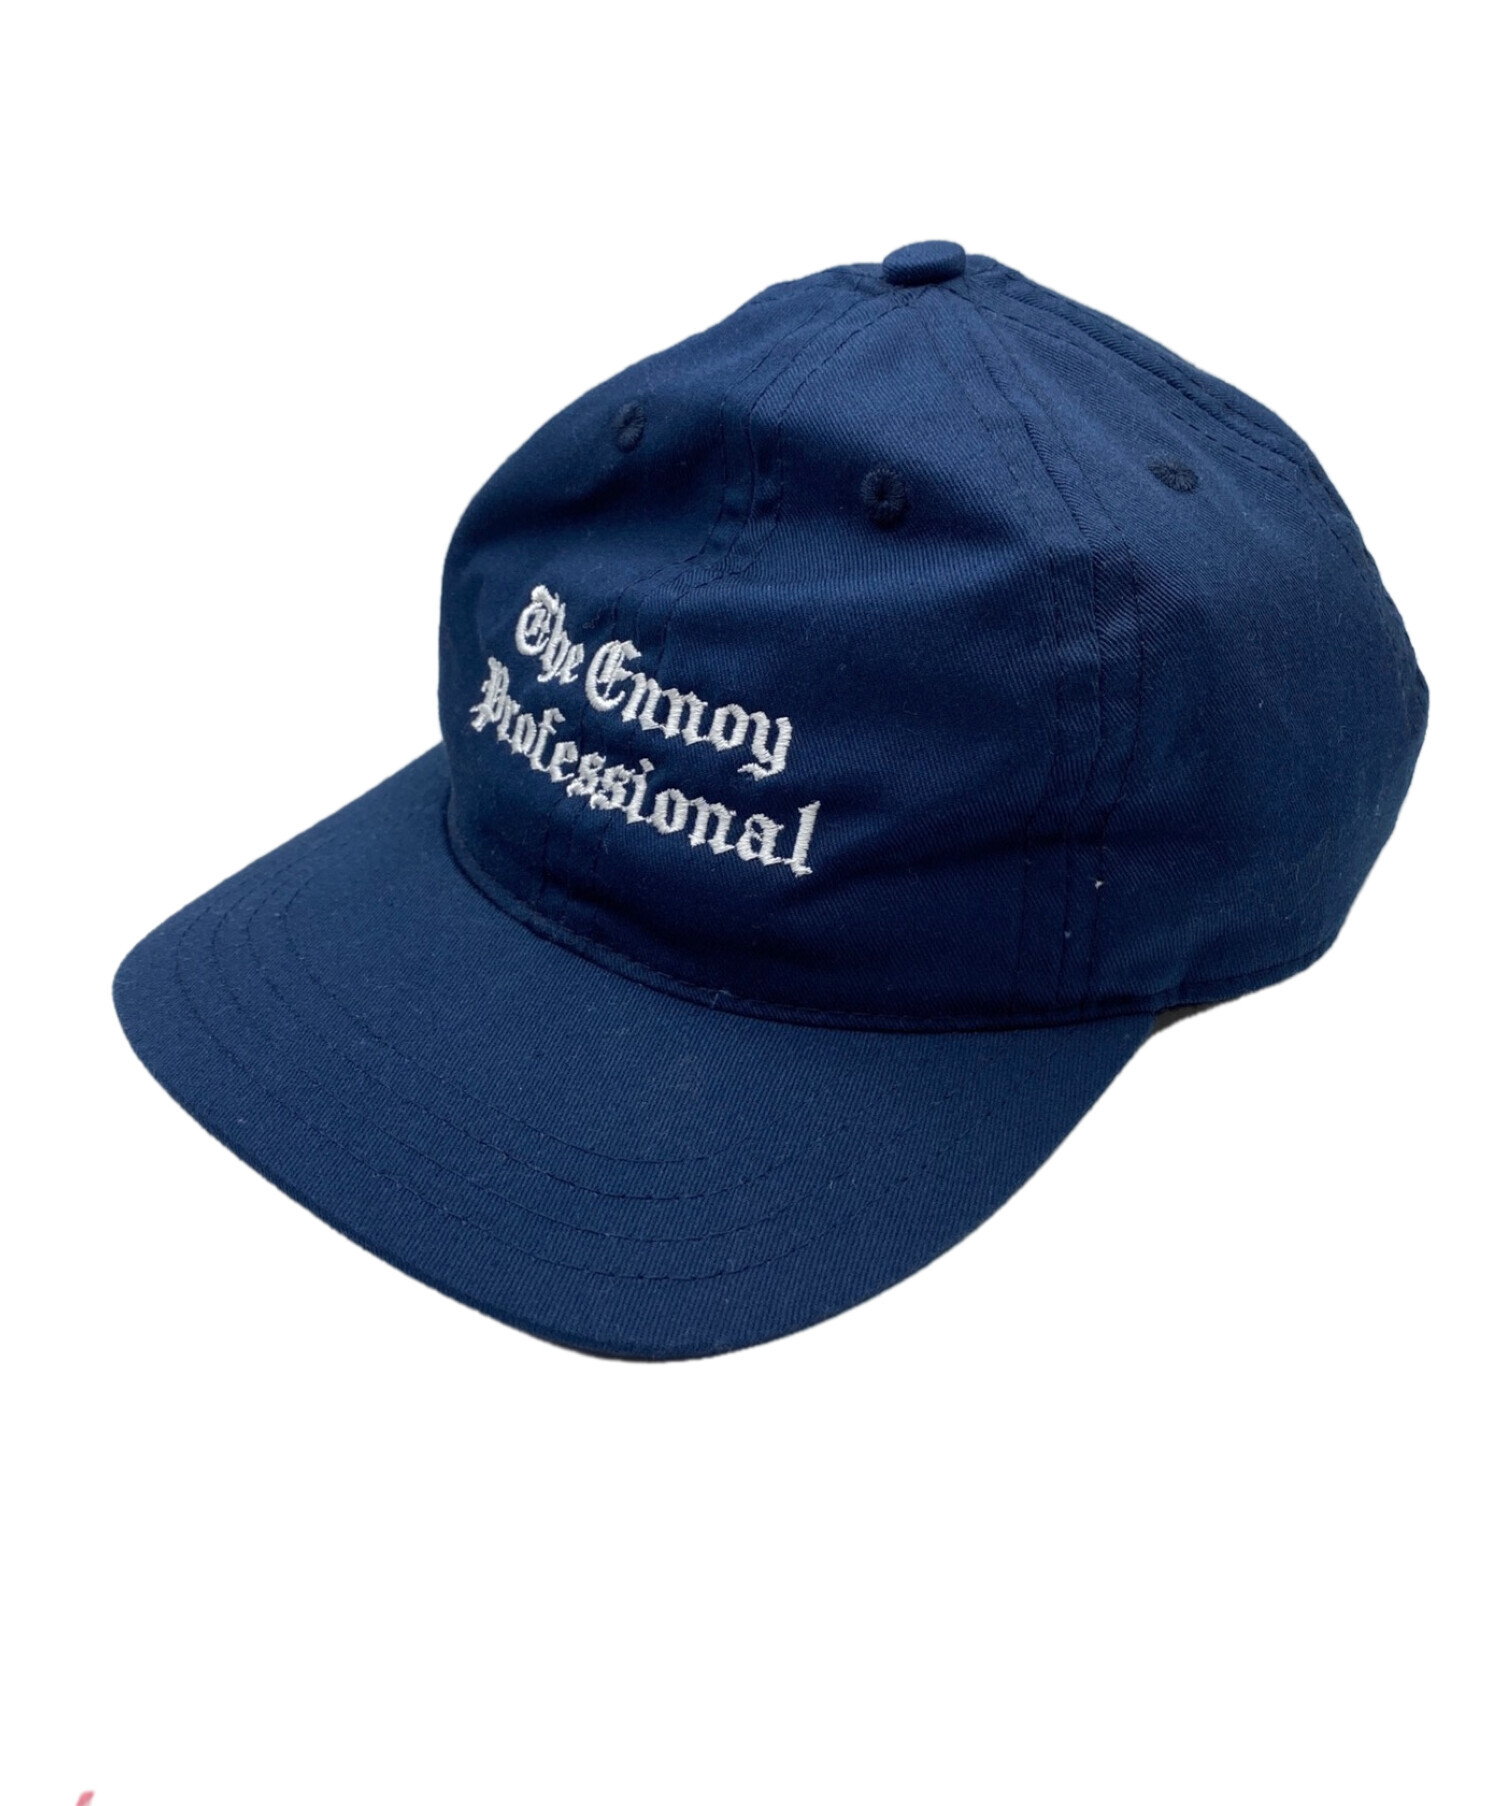 The Ennoy Professional® NEW CAP 黒 BLACK